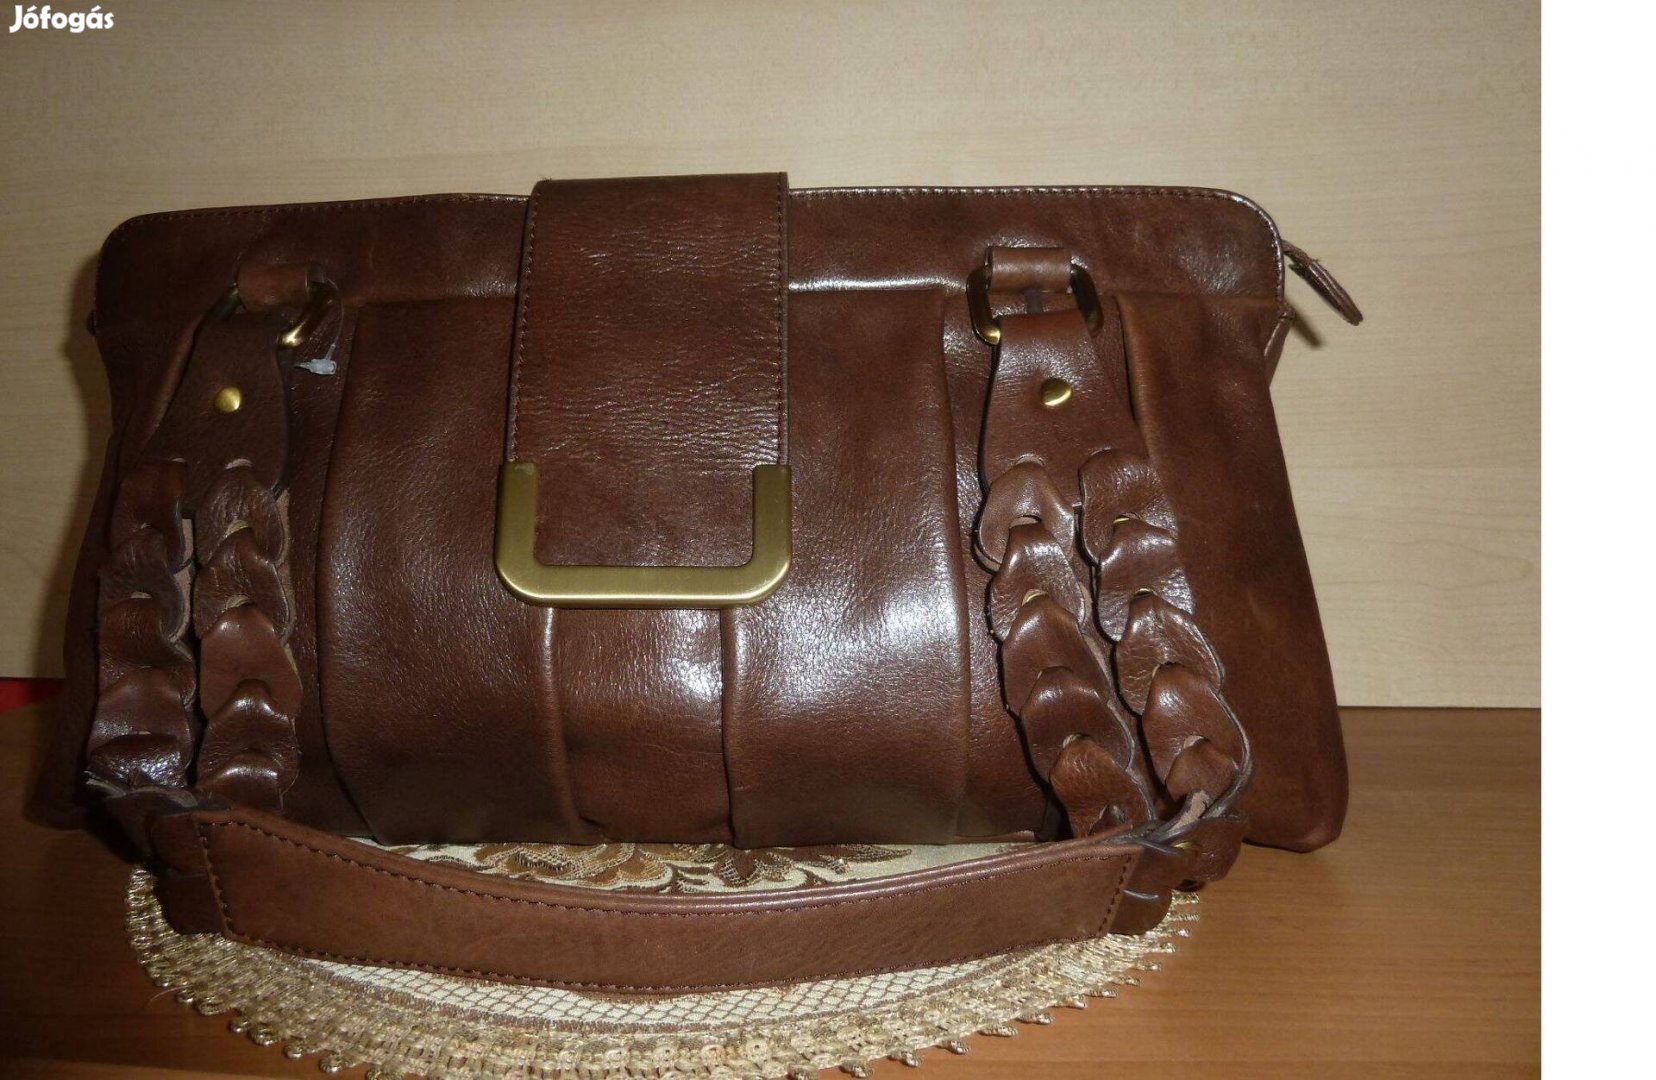 "Genuin Leather" Valódi bőr Női táska 39x22x14cm